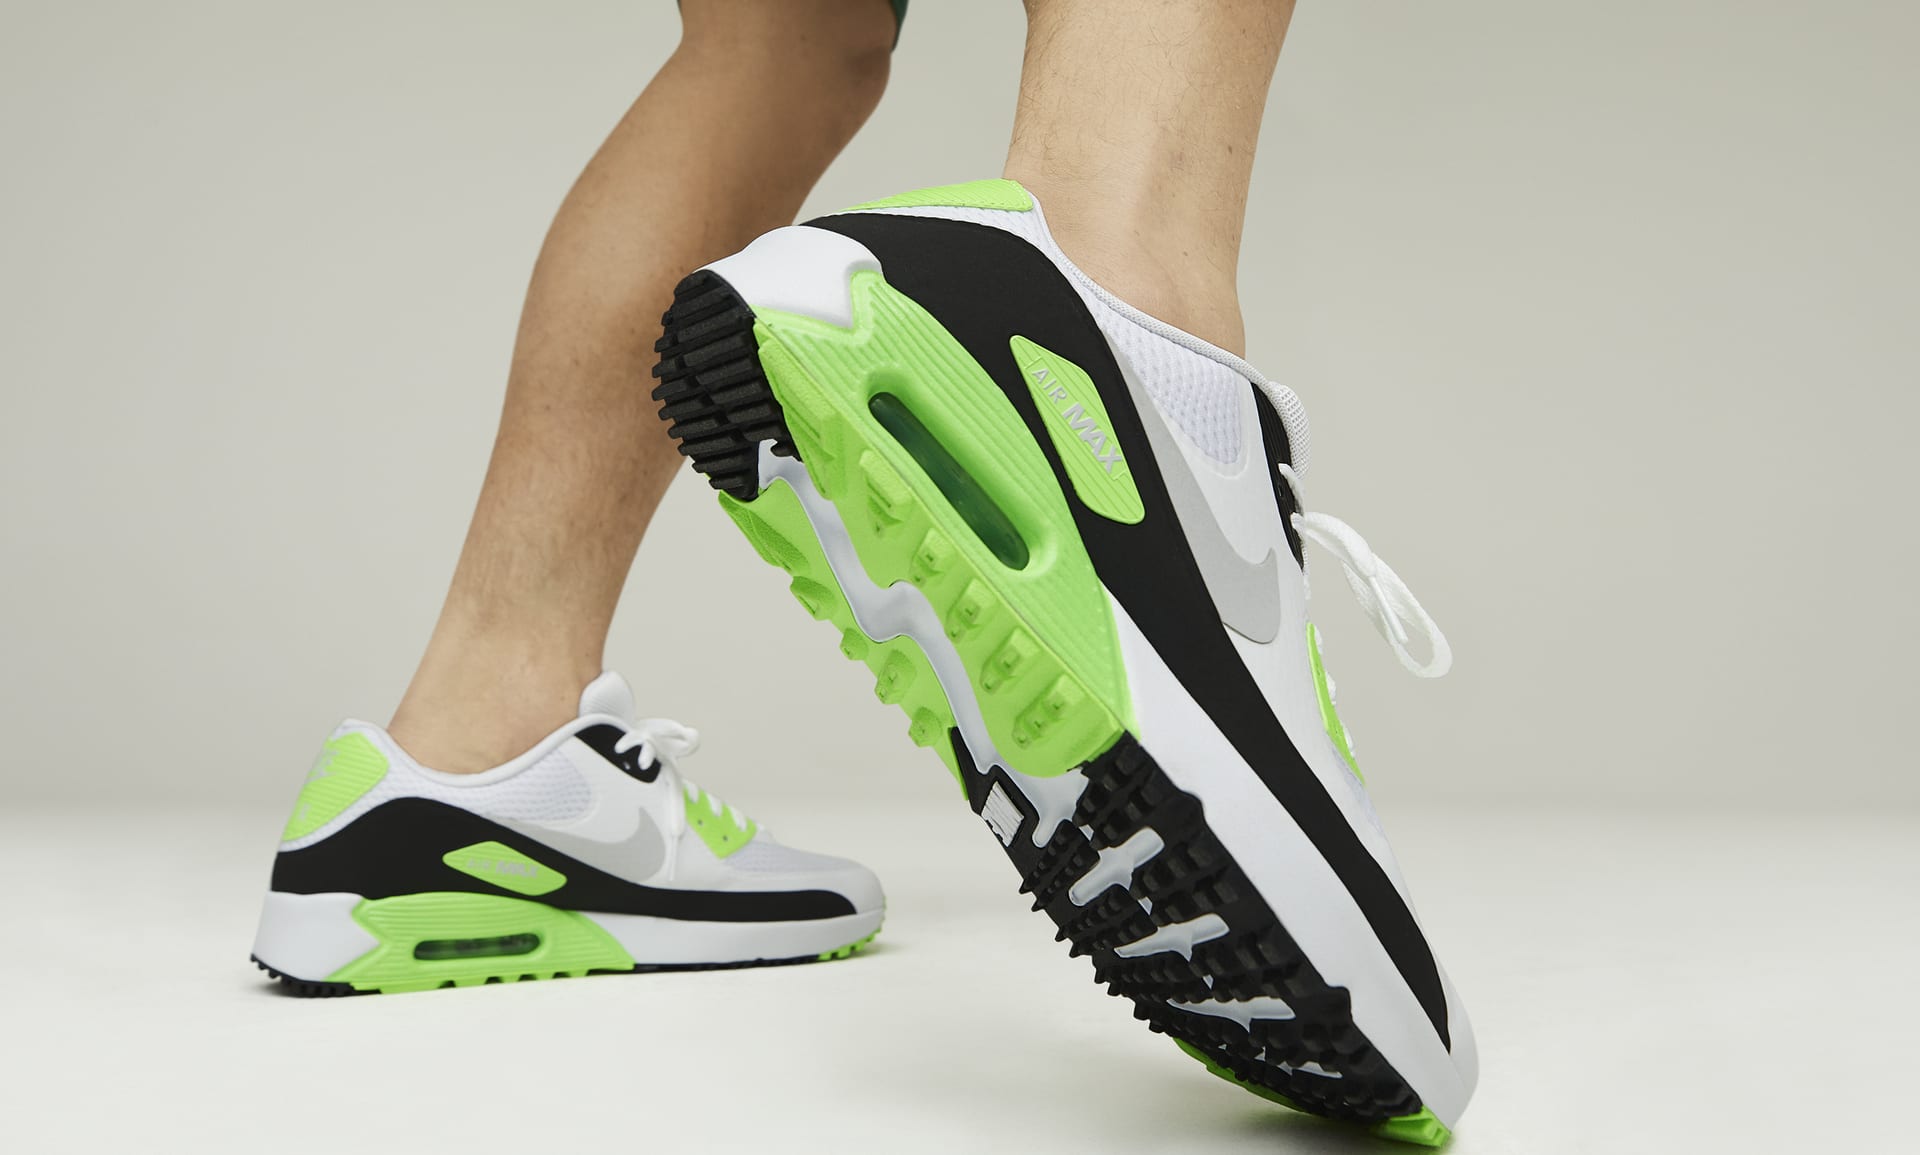 Nike Air Max 90 G Golf Shoe. Nike.com